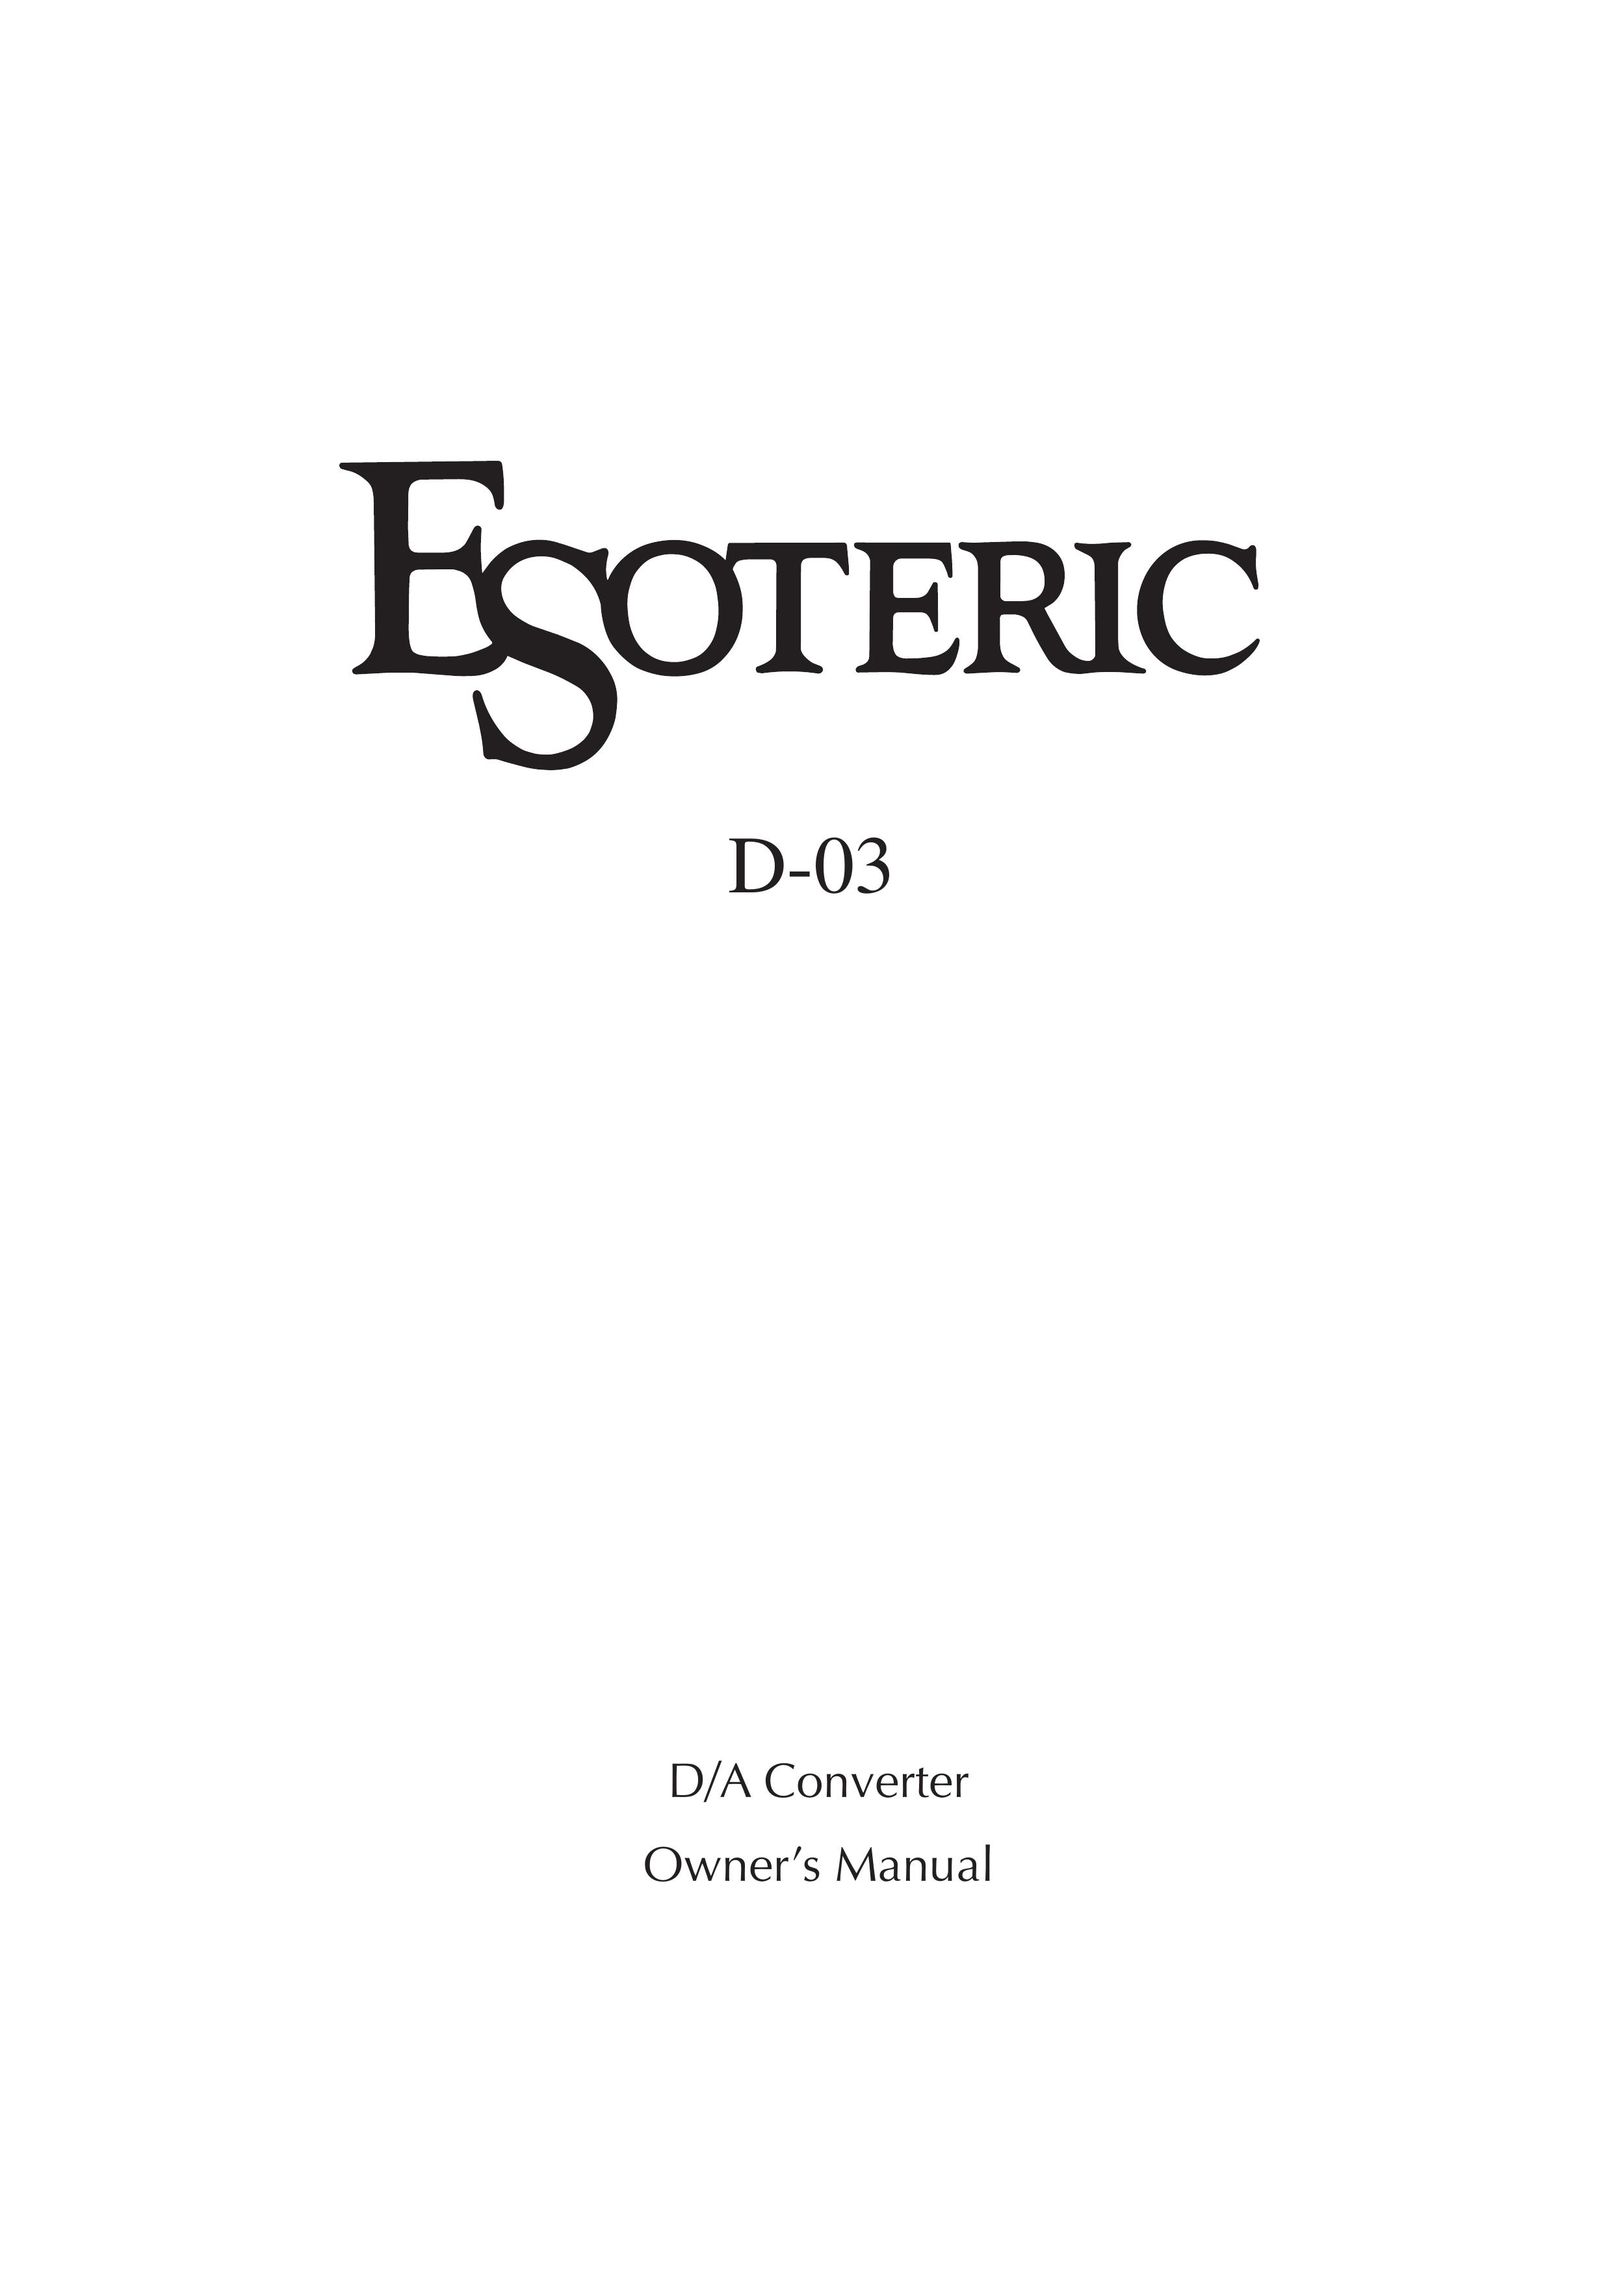 Esoteric D-03 DVD Player User Manual